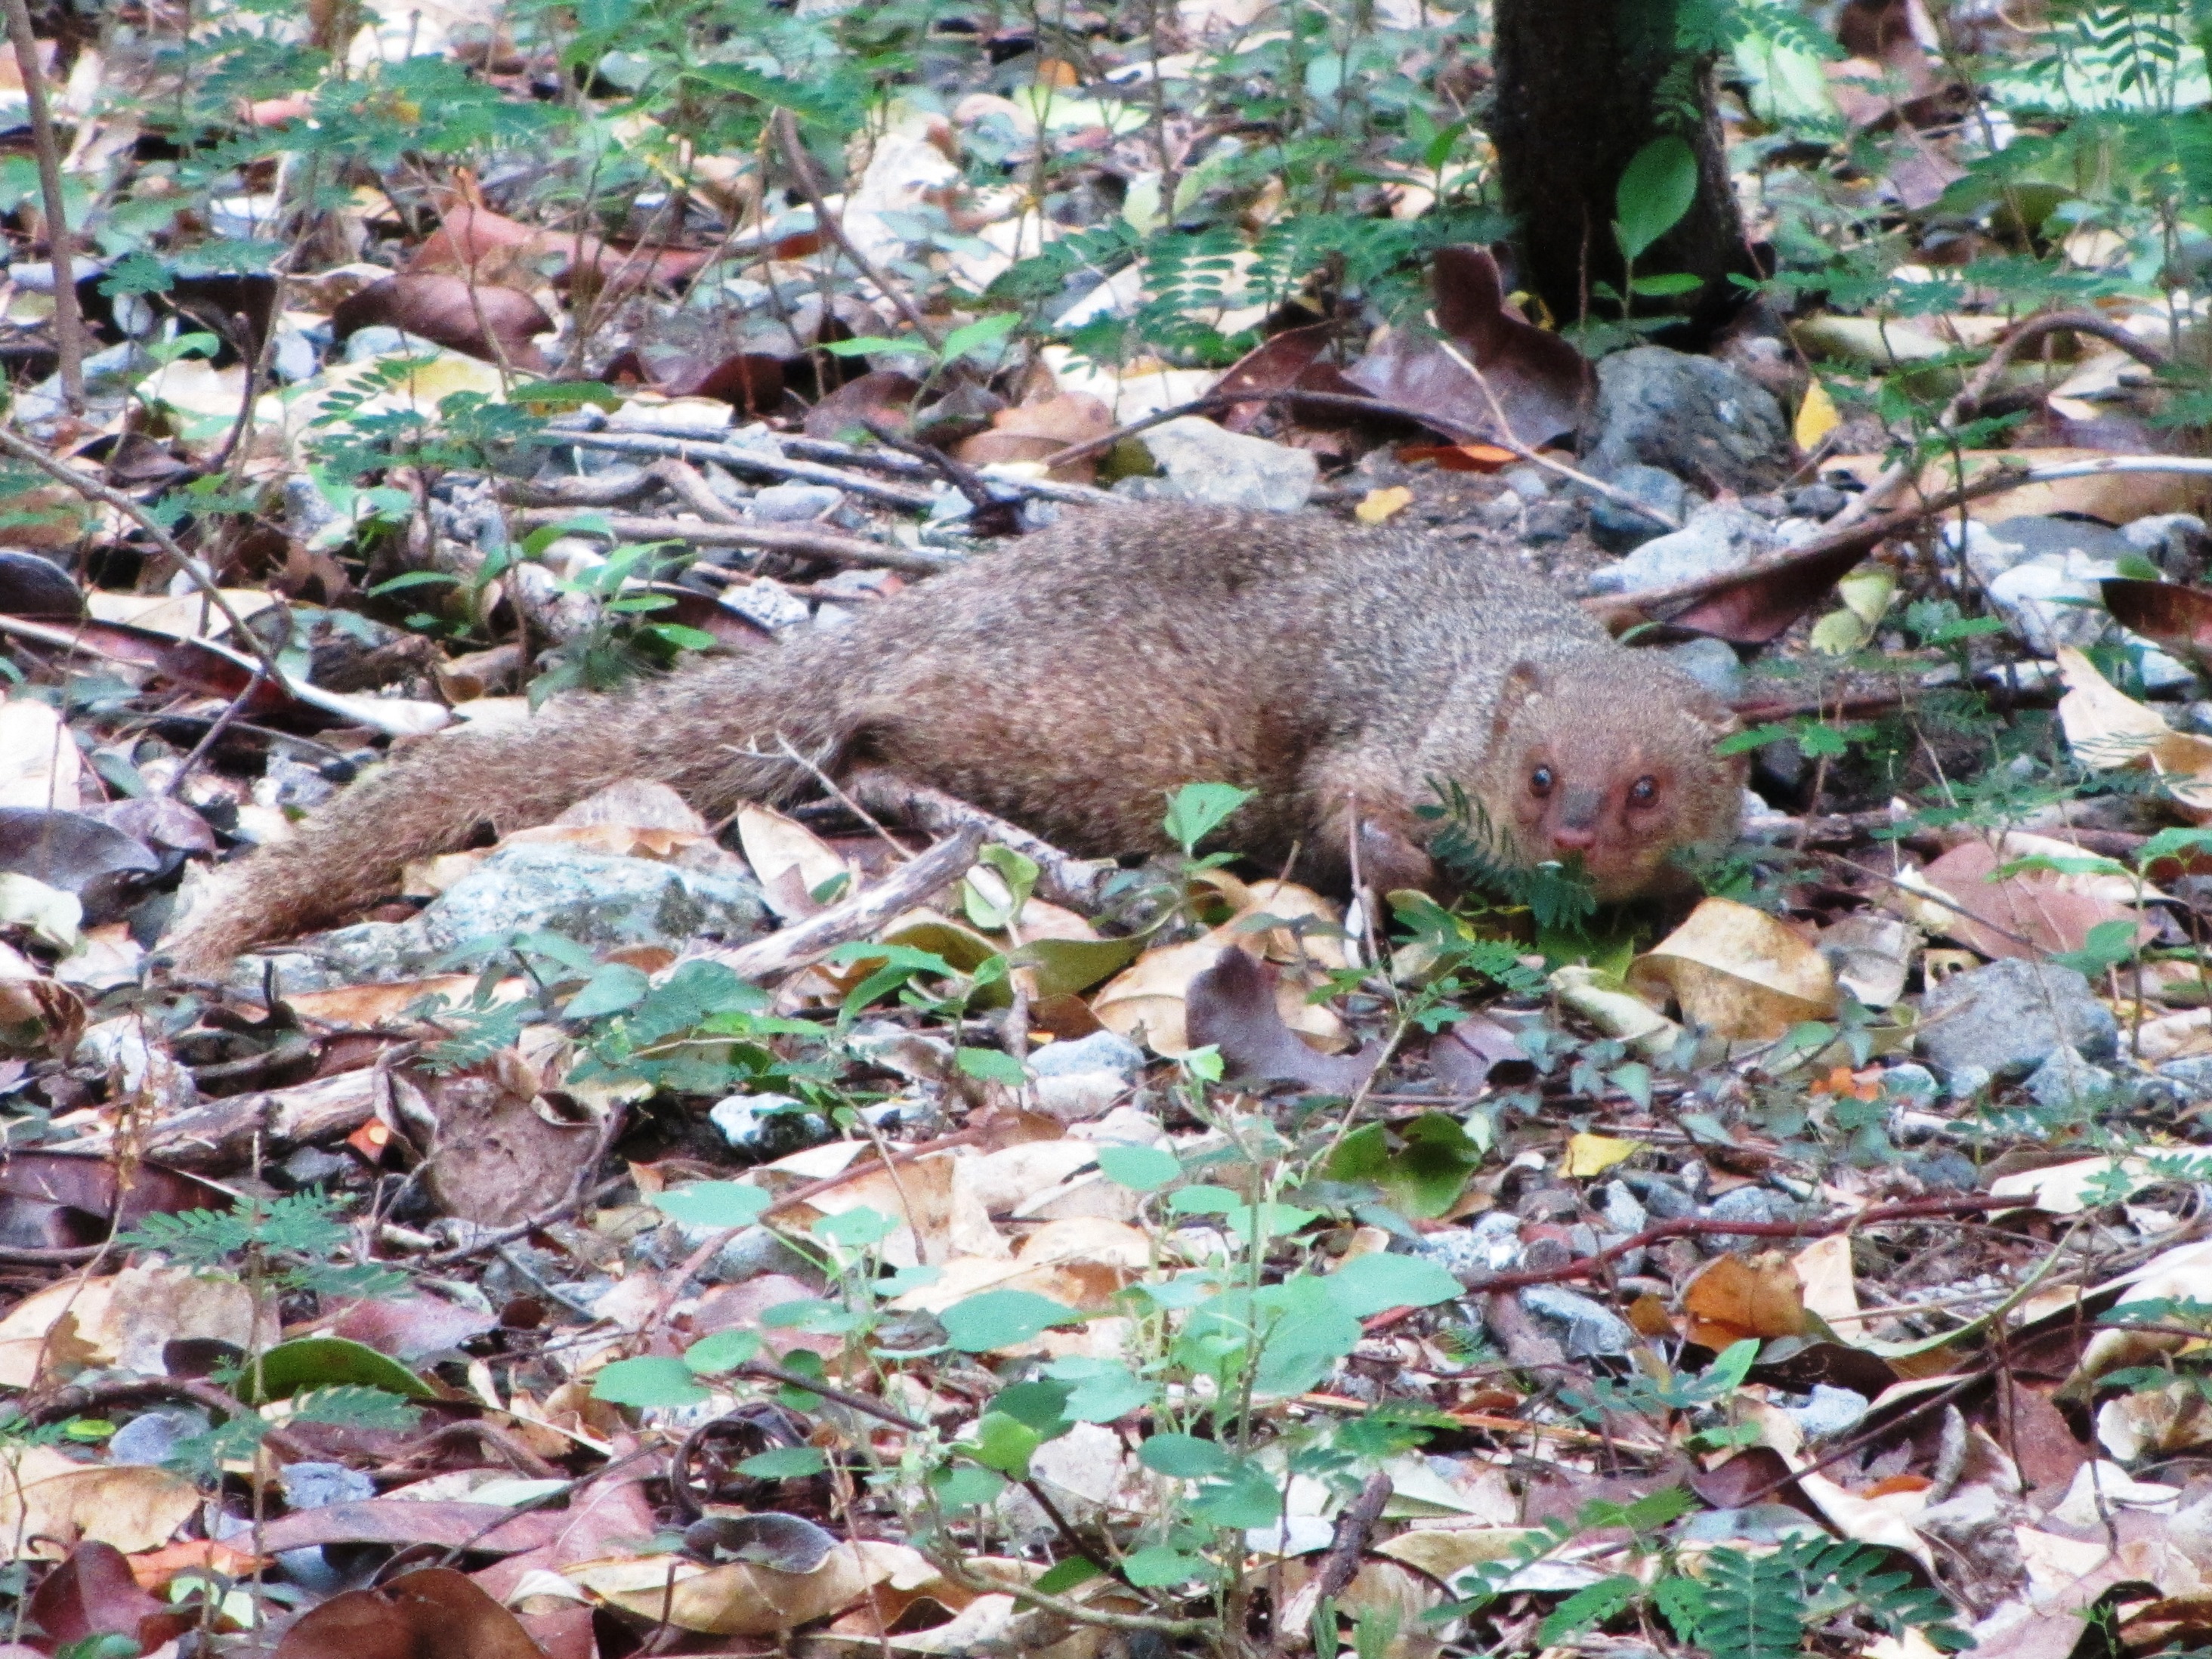 Photo of a mongoose